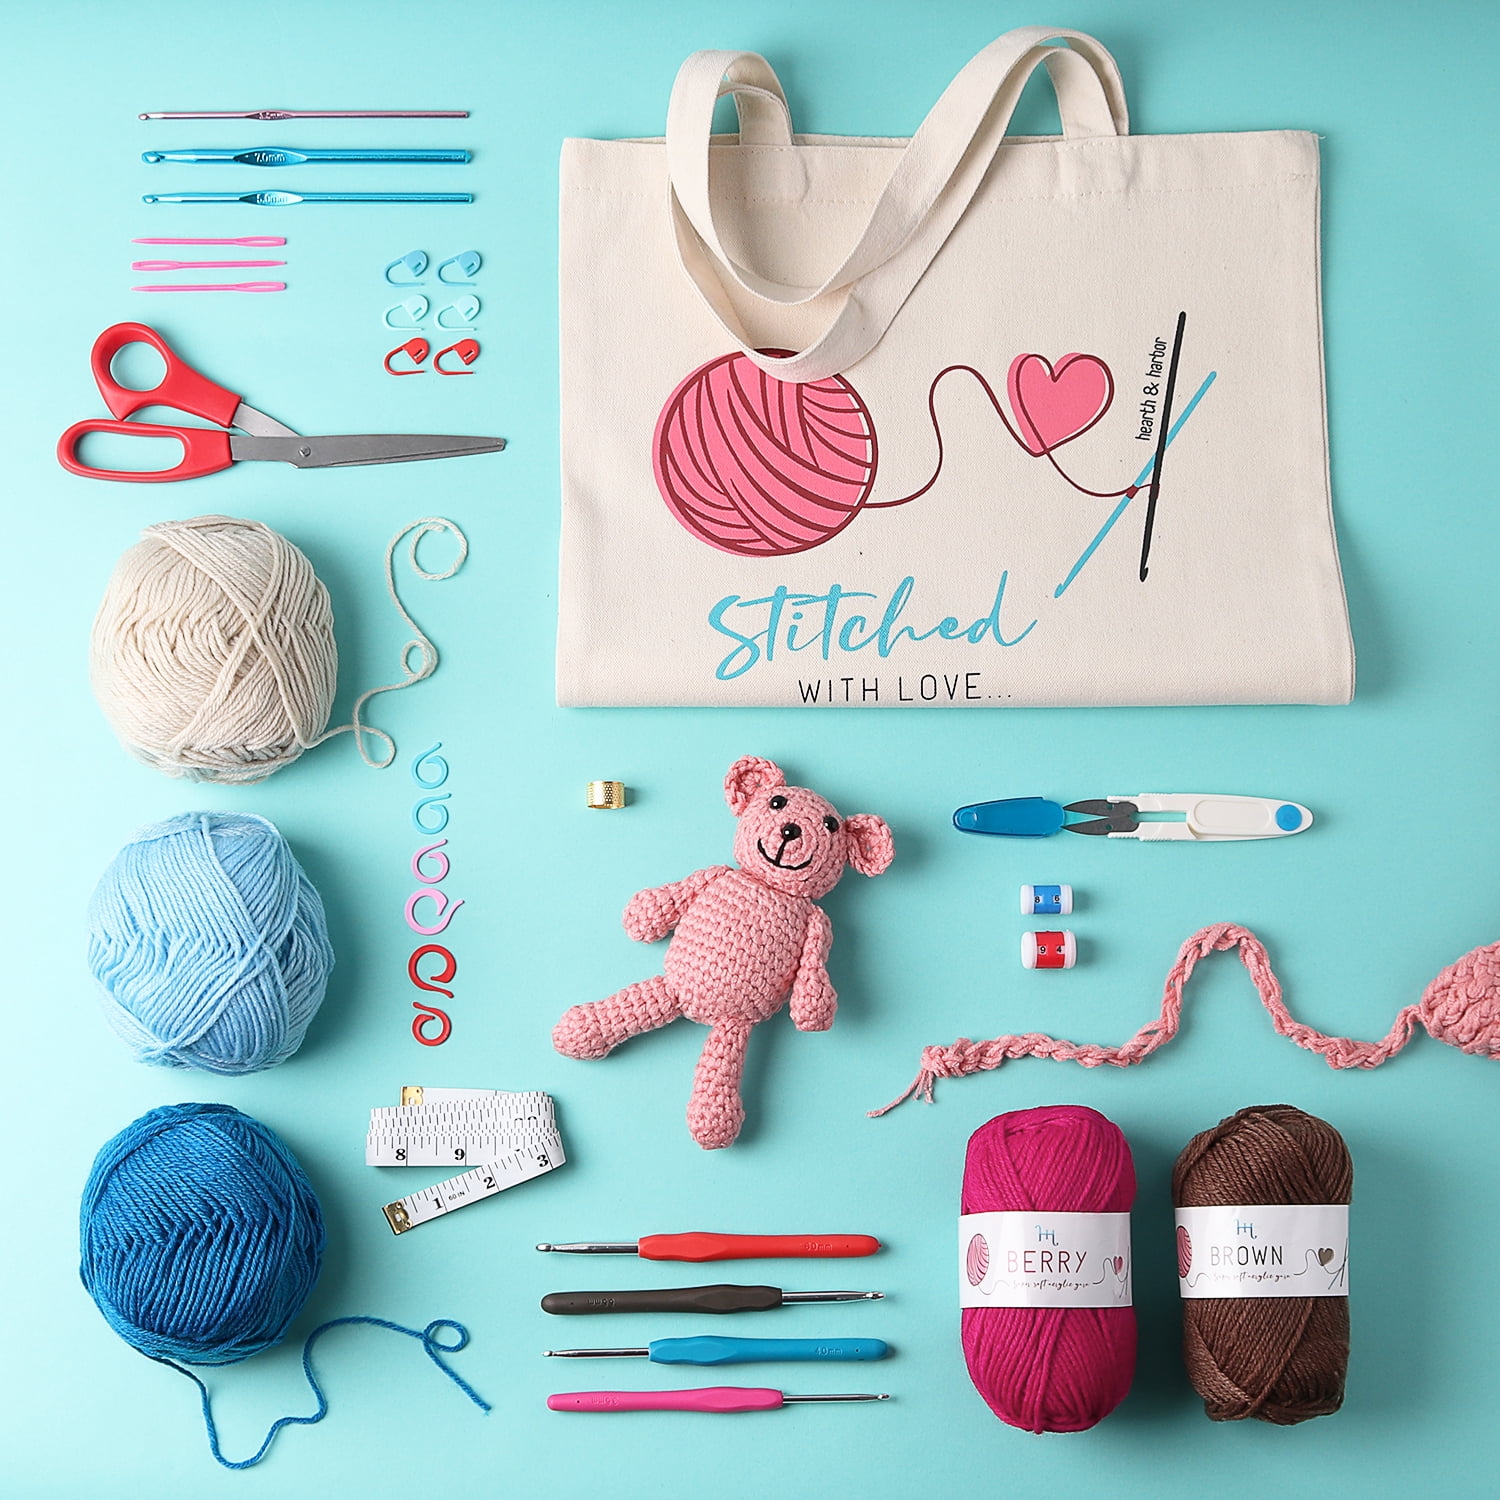 hearth & harbor crochet kit for beginners adults